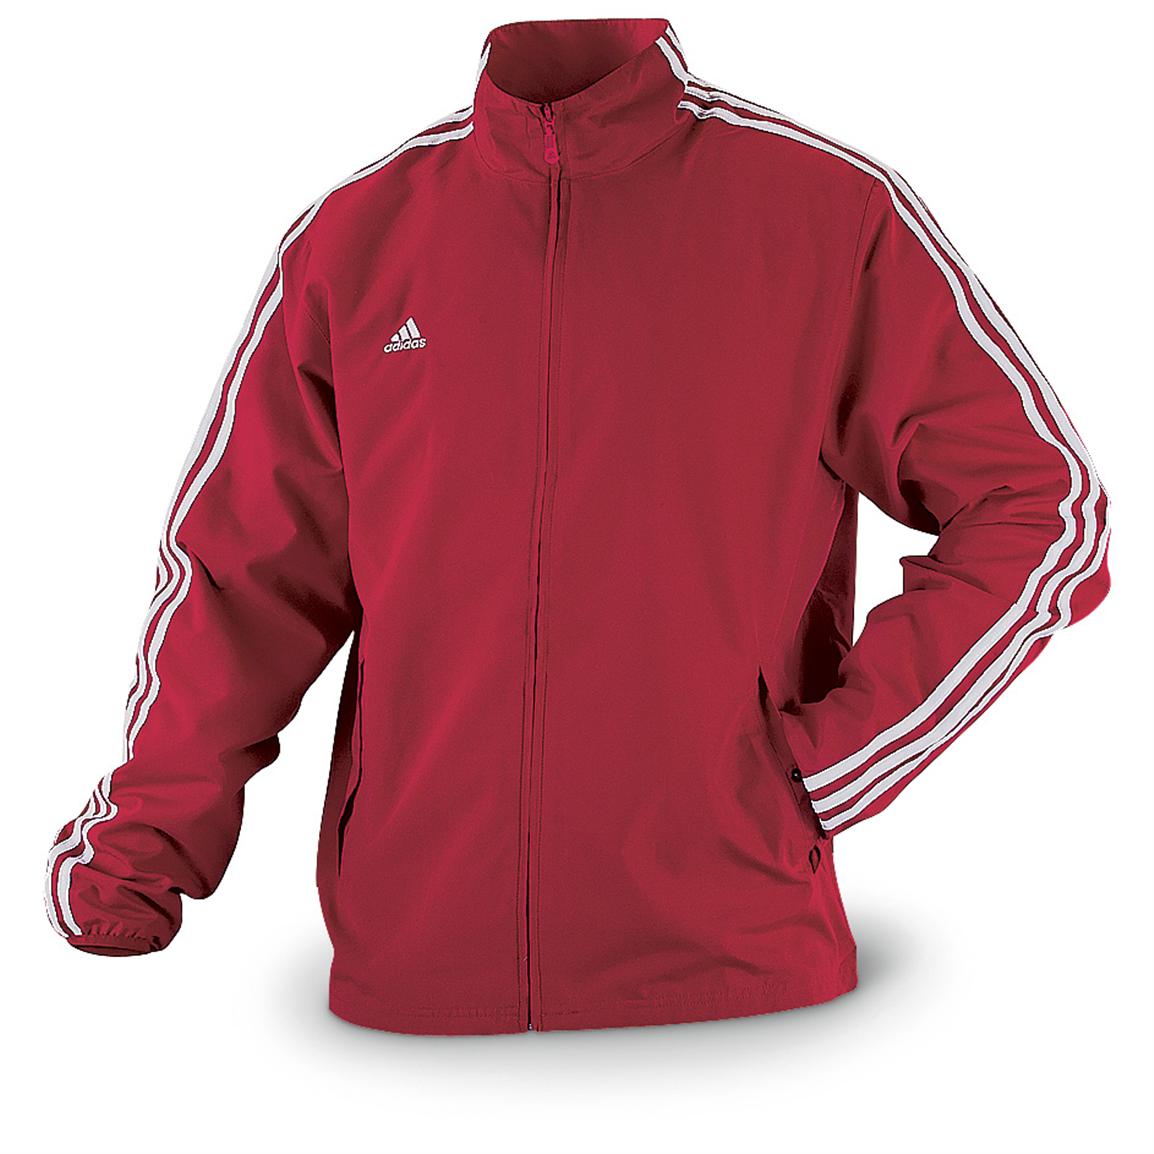 Adidas® Performance Jacket - 303916, Uninsulated Jackets & Coats at